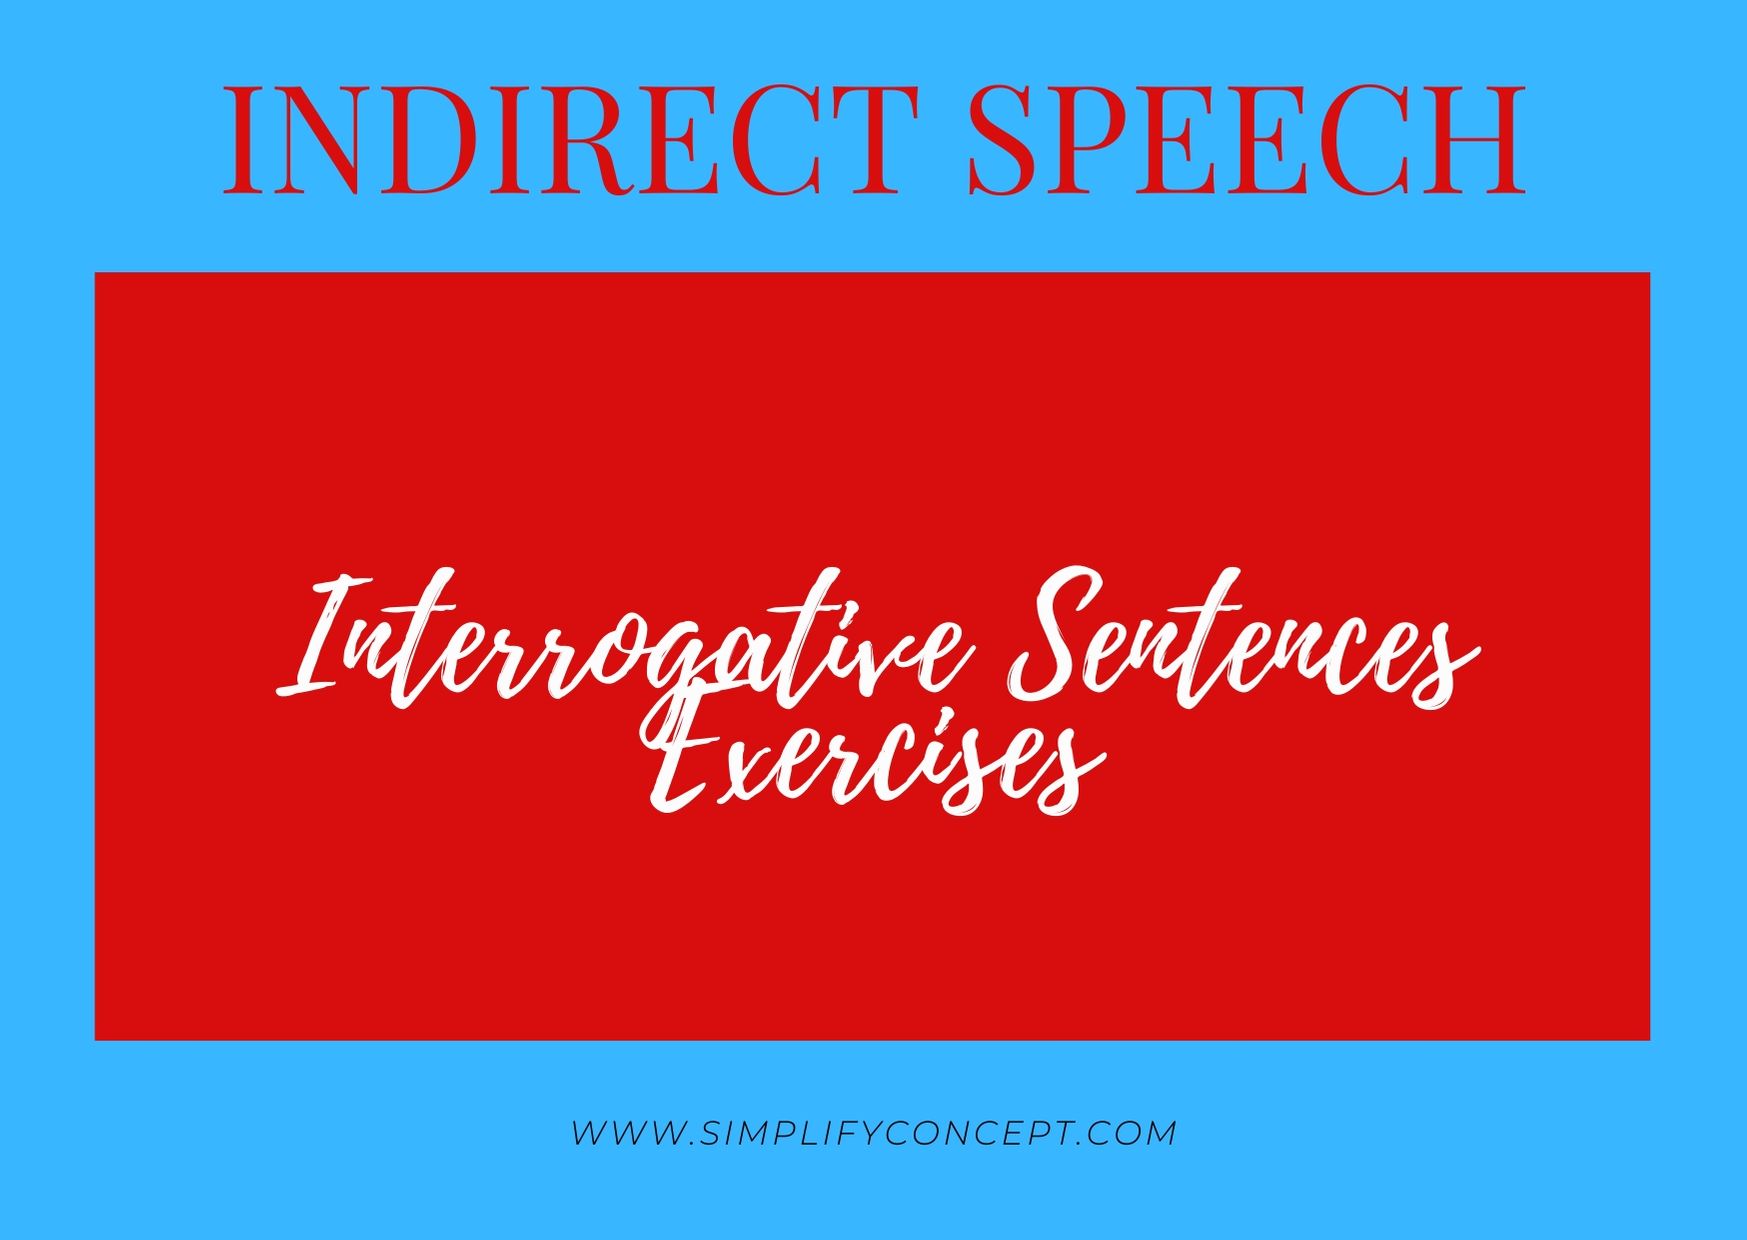 indirect speech interrogative sentences exercises, simplifyconcept.com